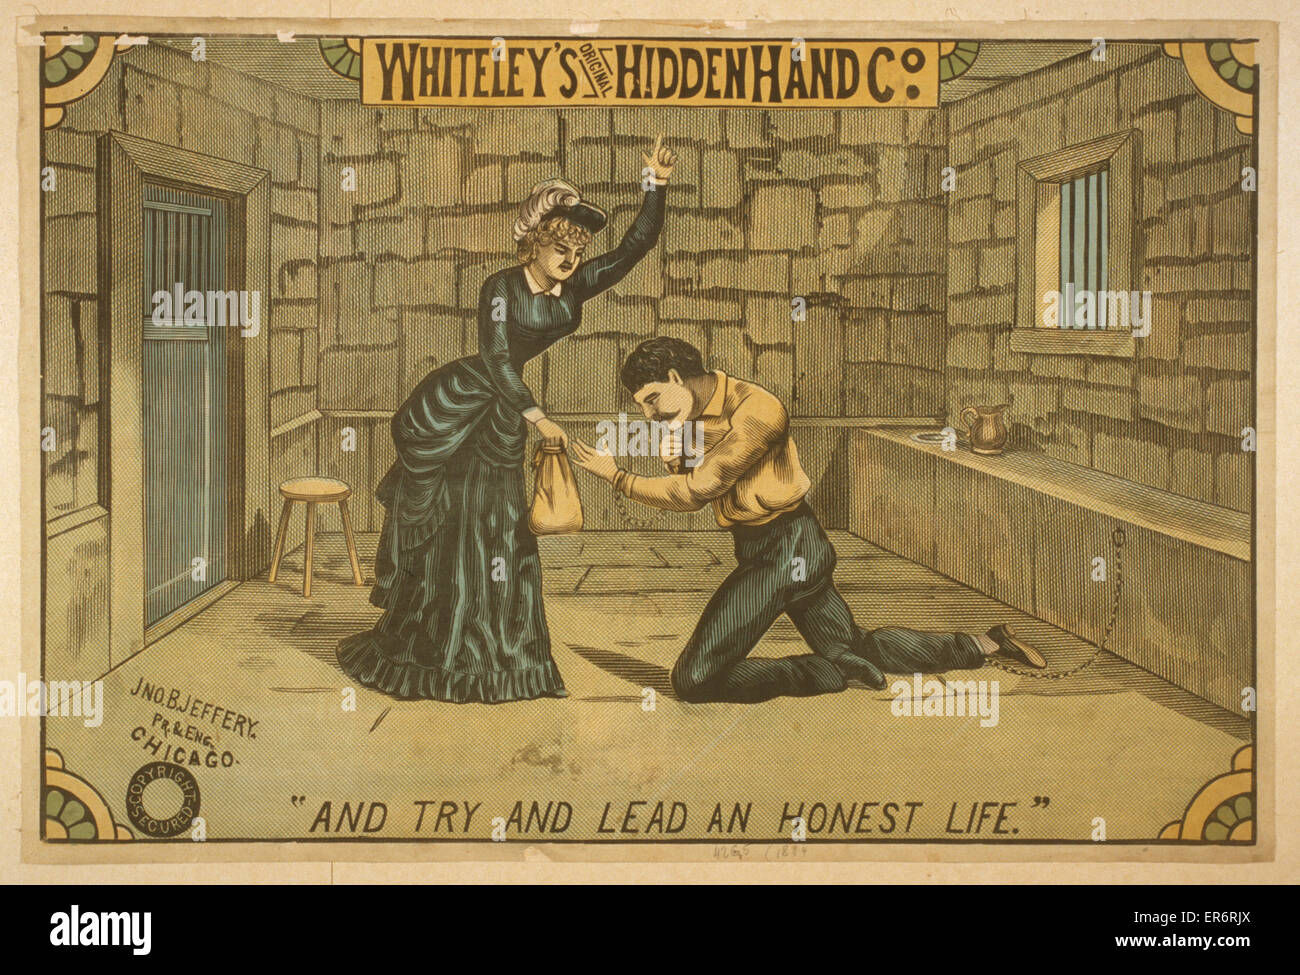 Whiteley's Original Hidden Hand Co Stockfoto